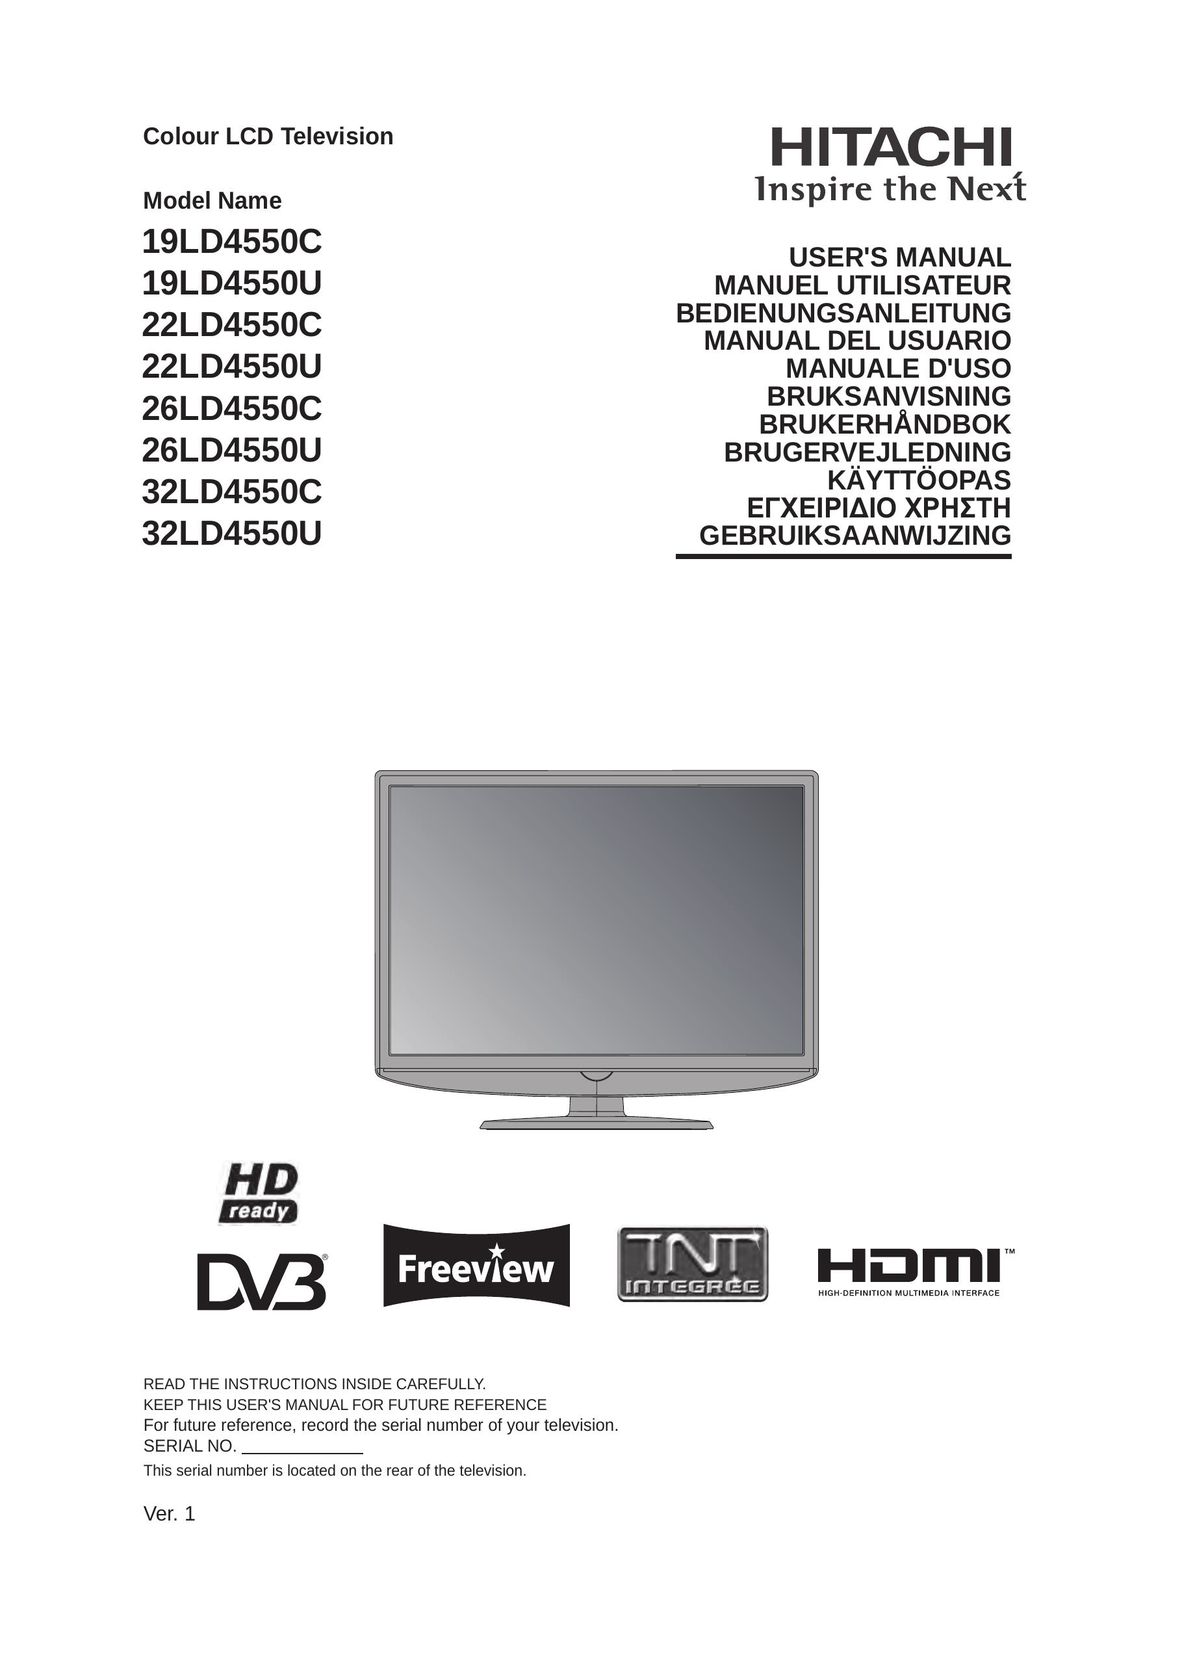 Hitachi 22LD4550C Flat Panel Television User Manual